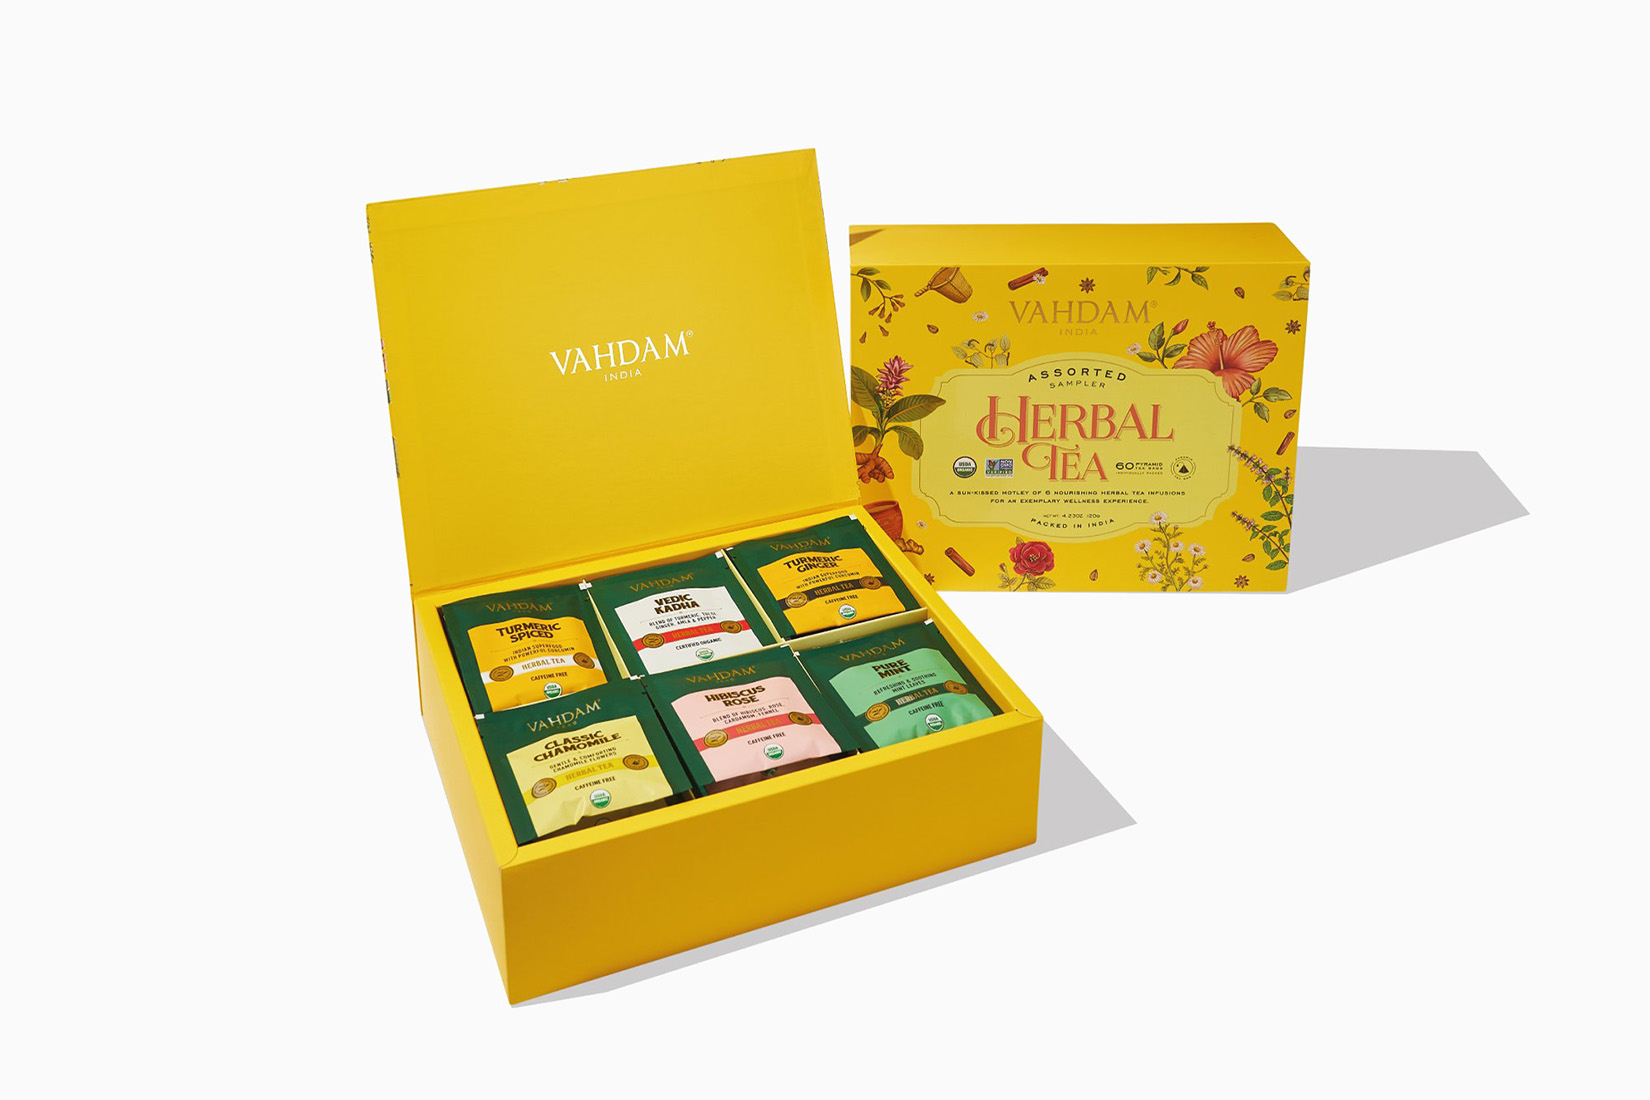 vahdam herbal tea review luxe digital